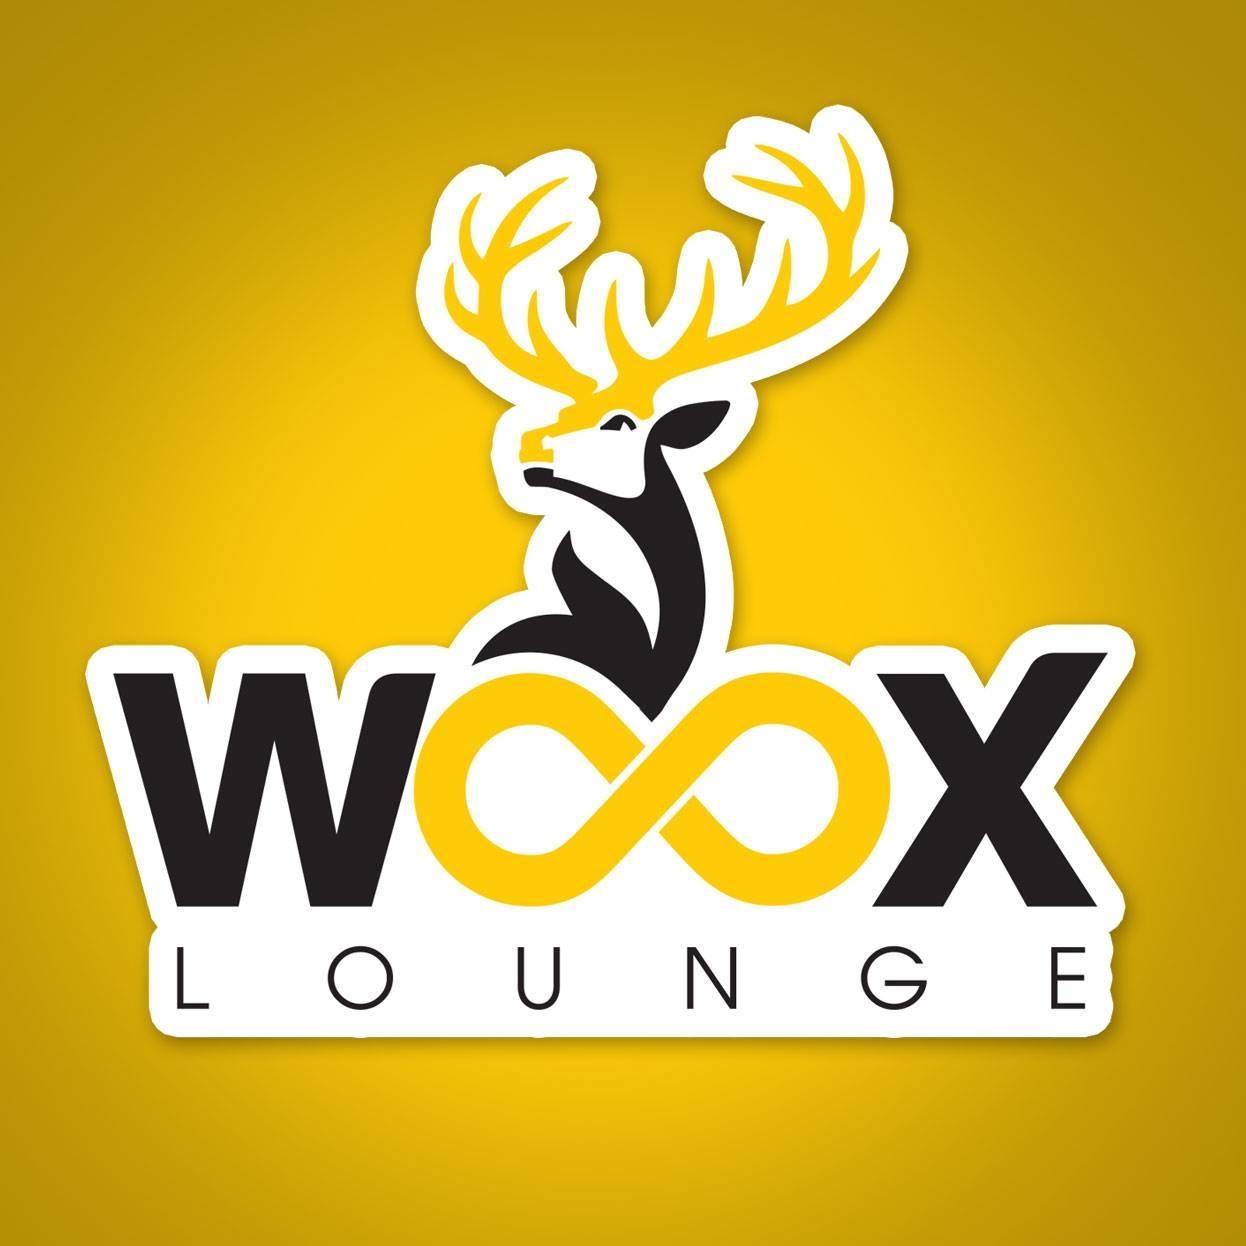 Woox Lounge logo